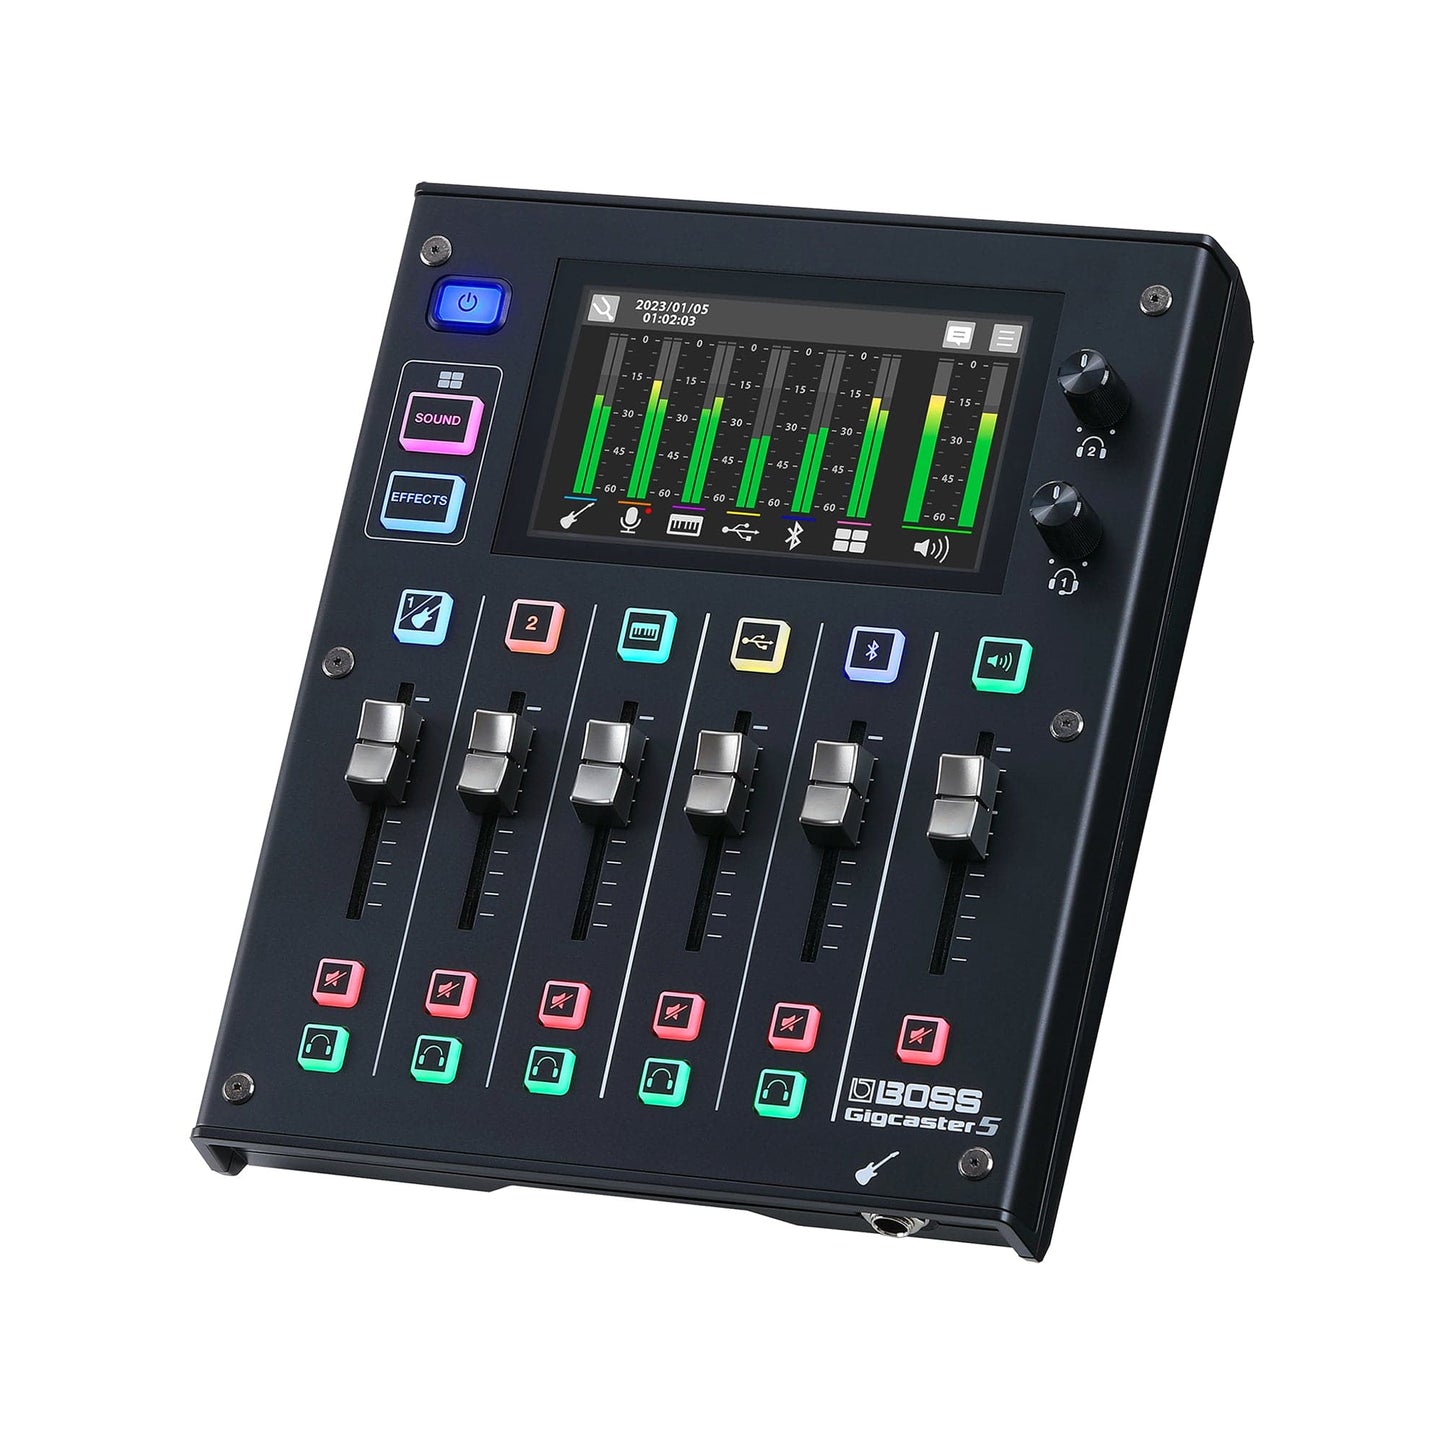 Boss Gigcaster 5 Streaming Mixer Pro Audio / Mixers